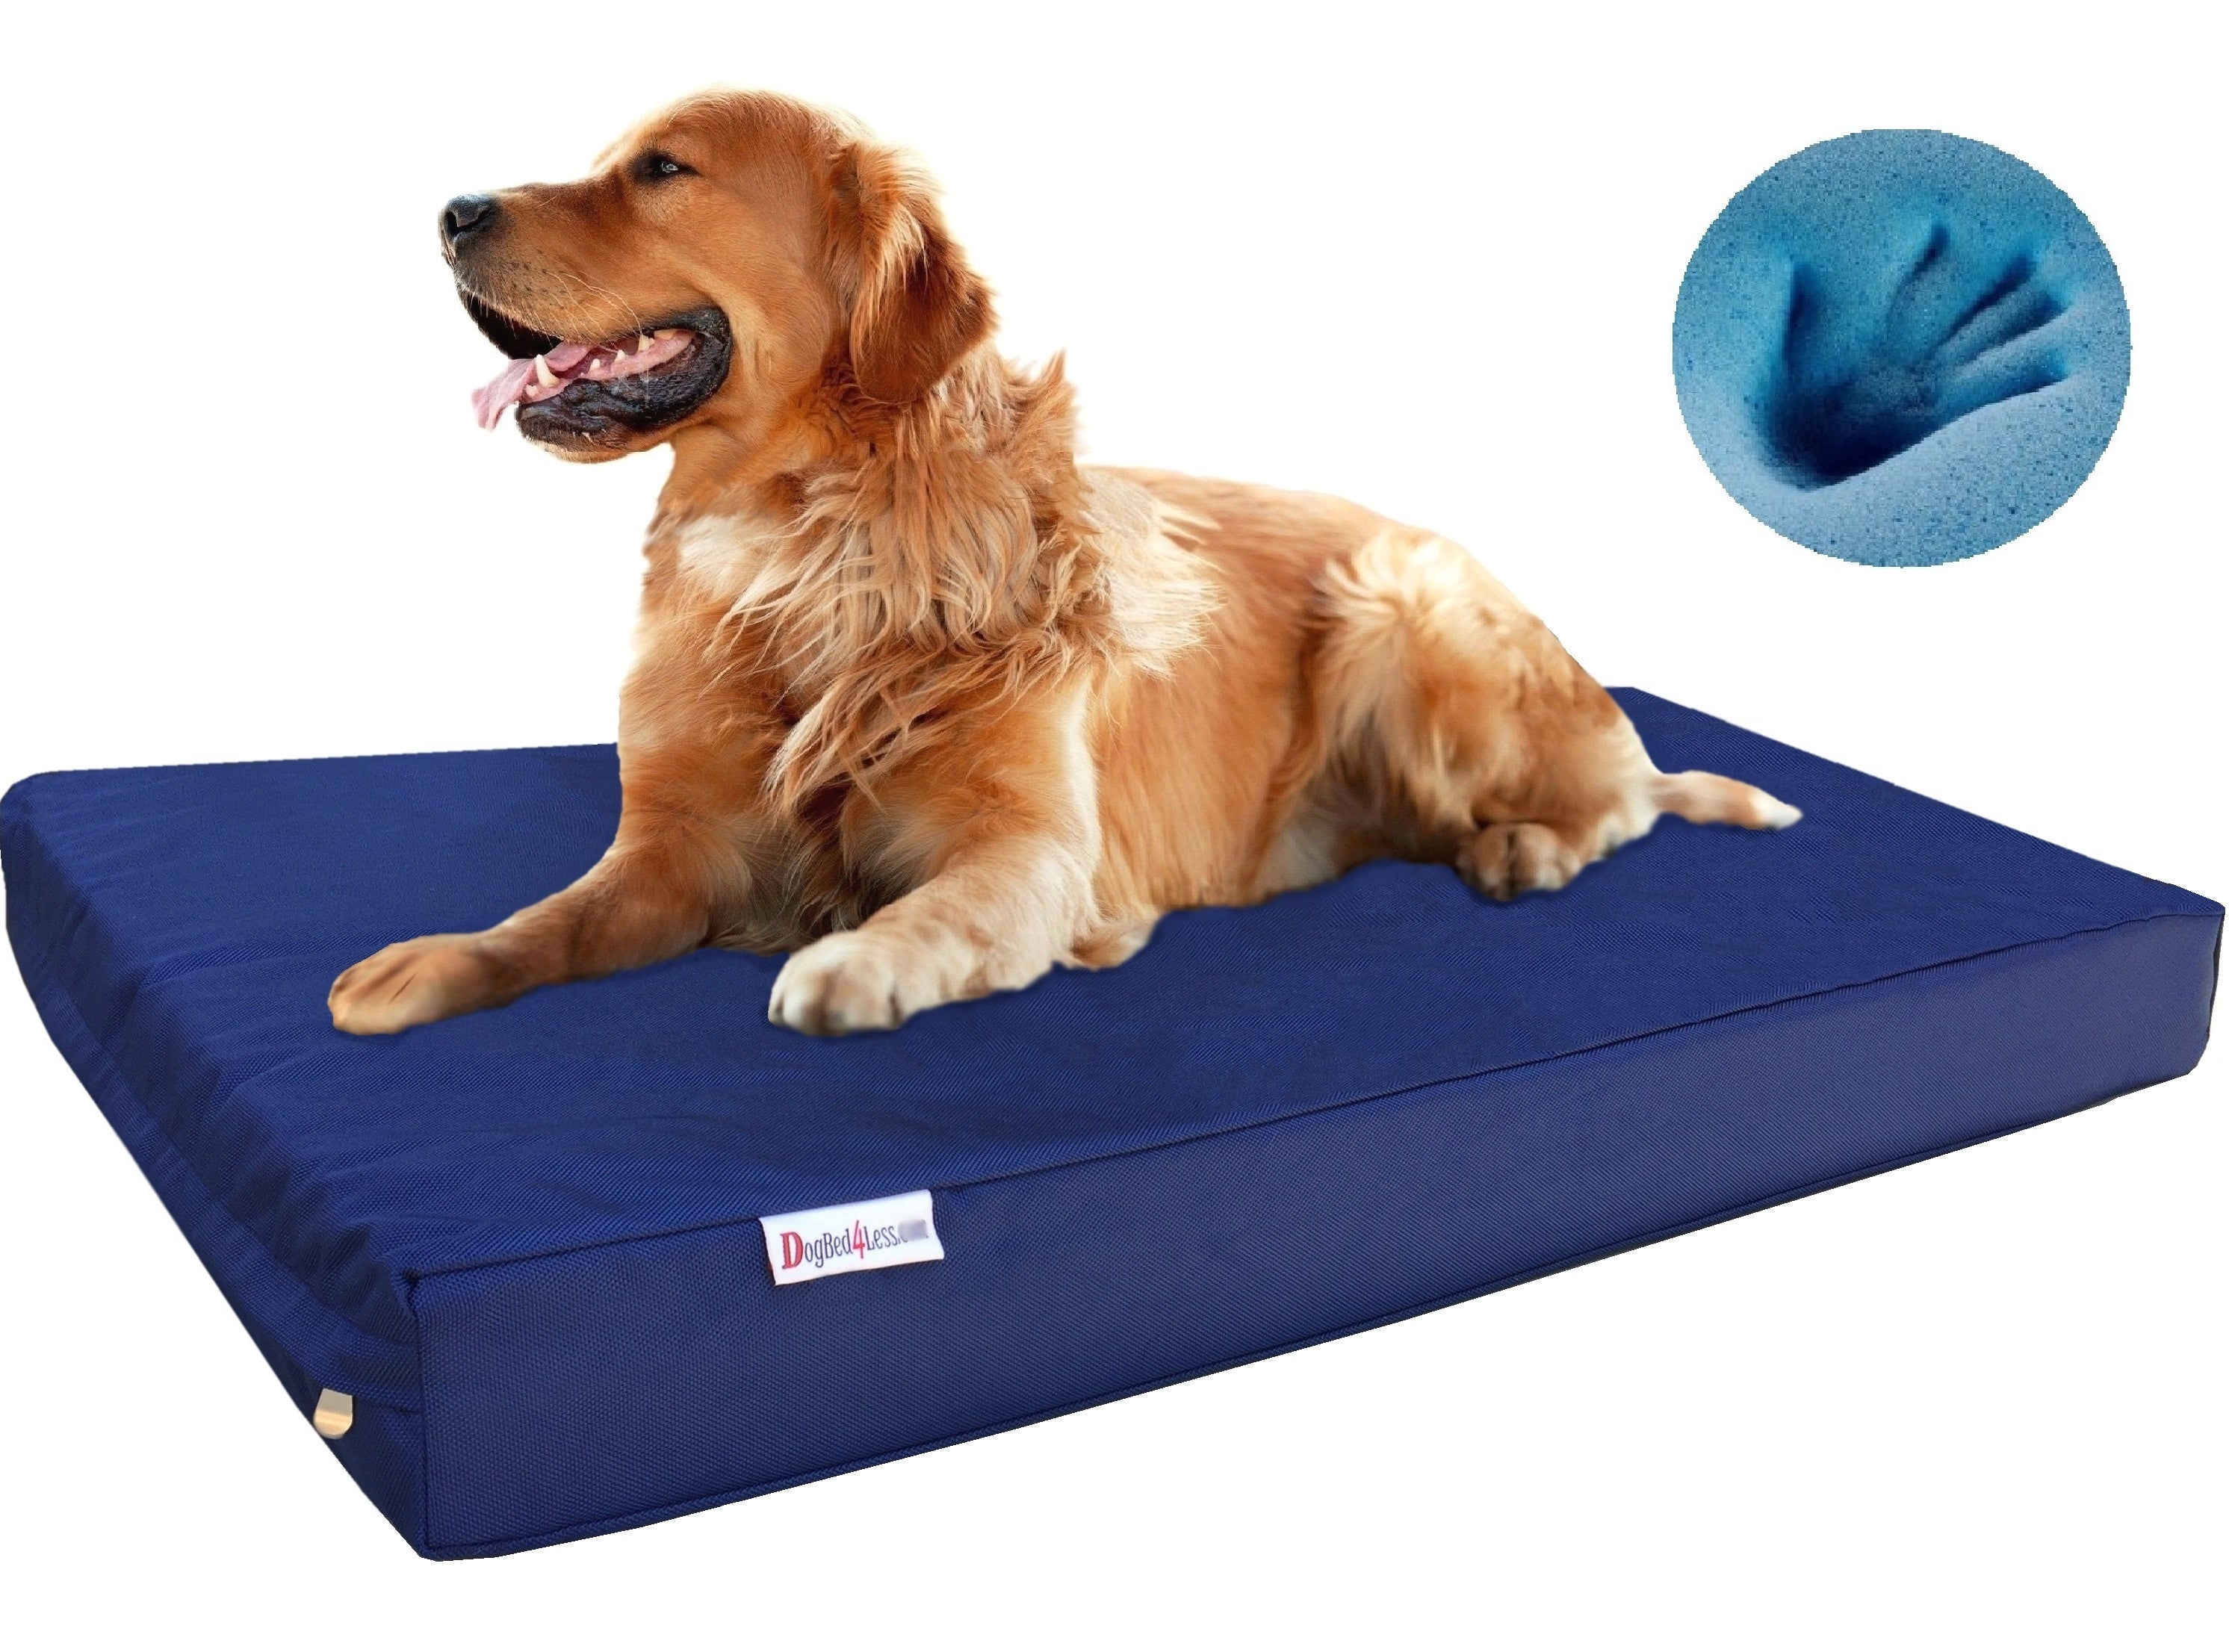 Medium memory foam dog bed